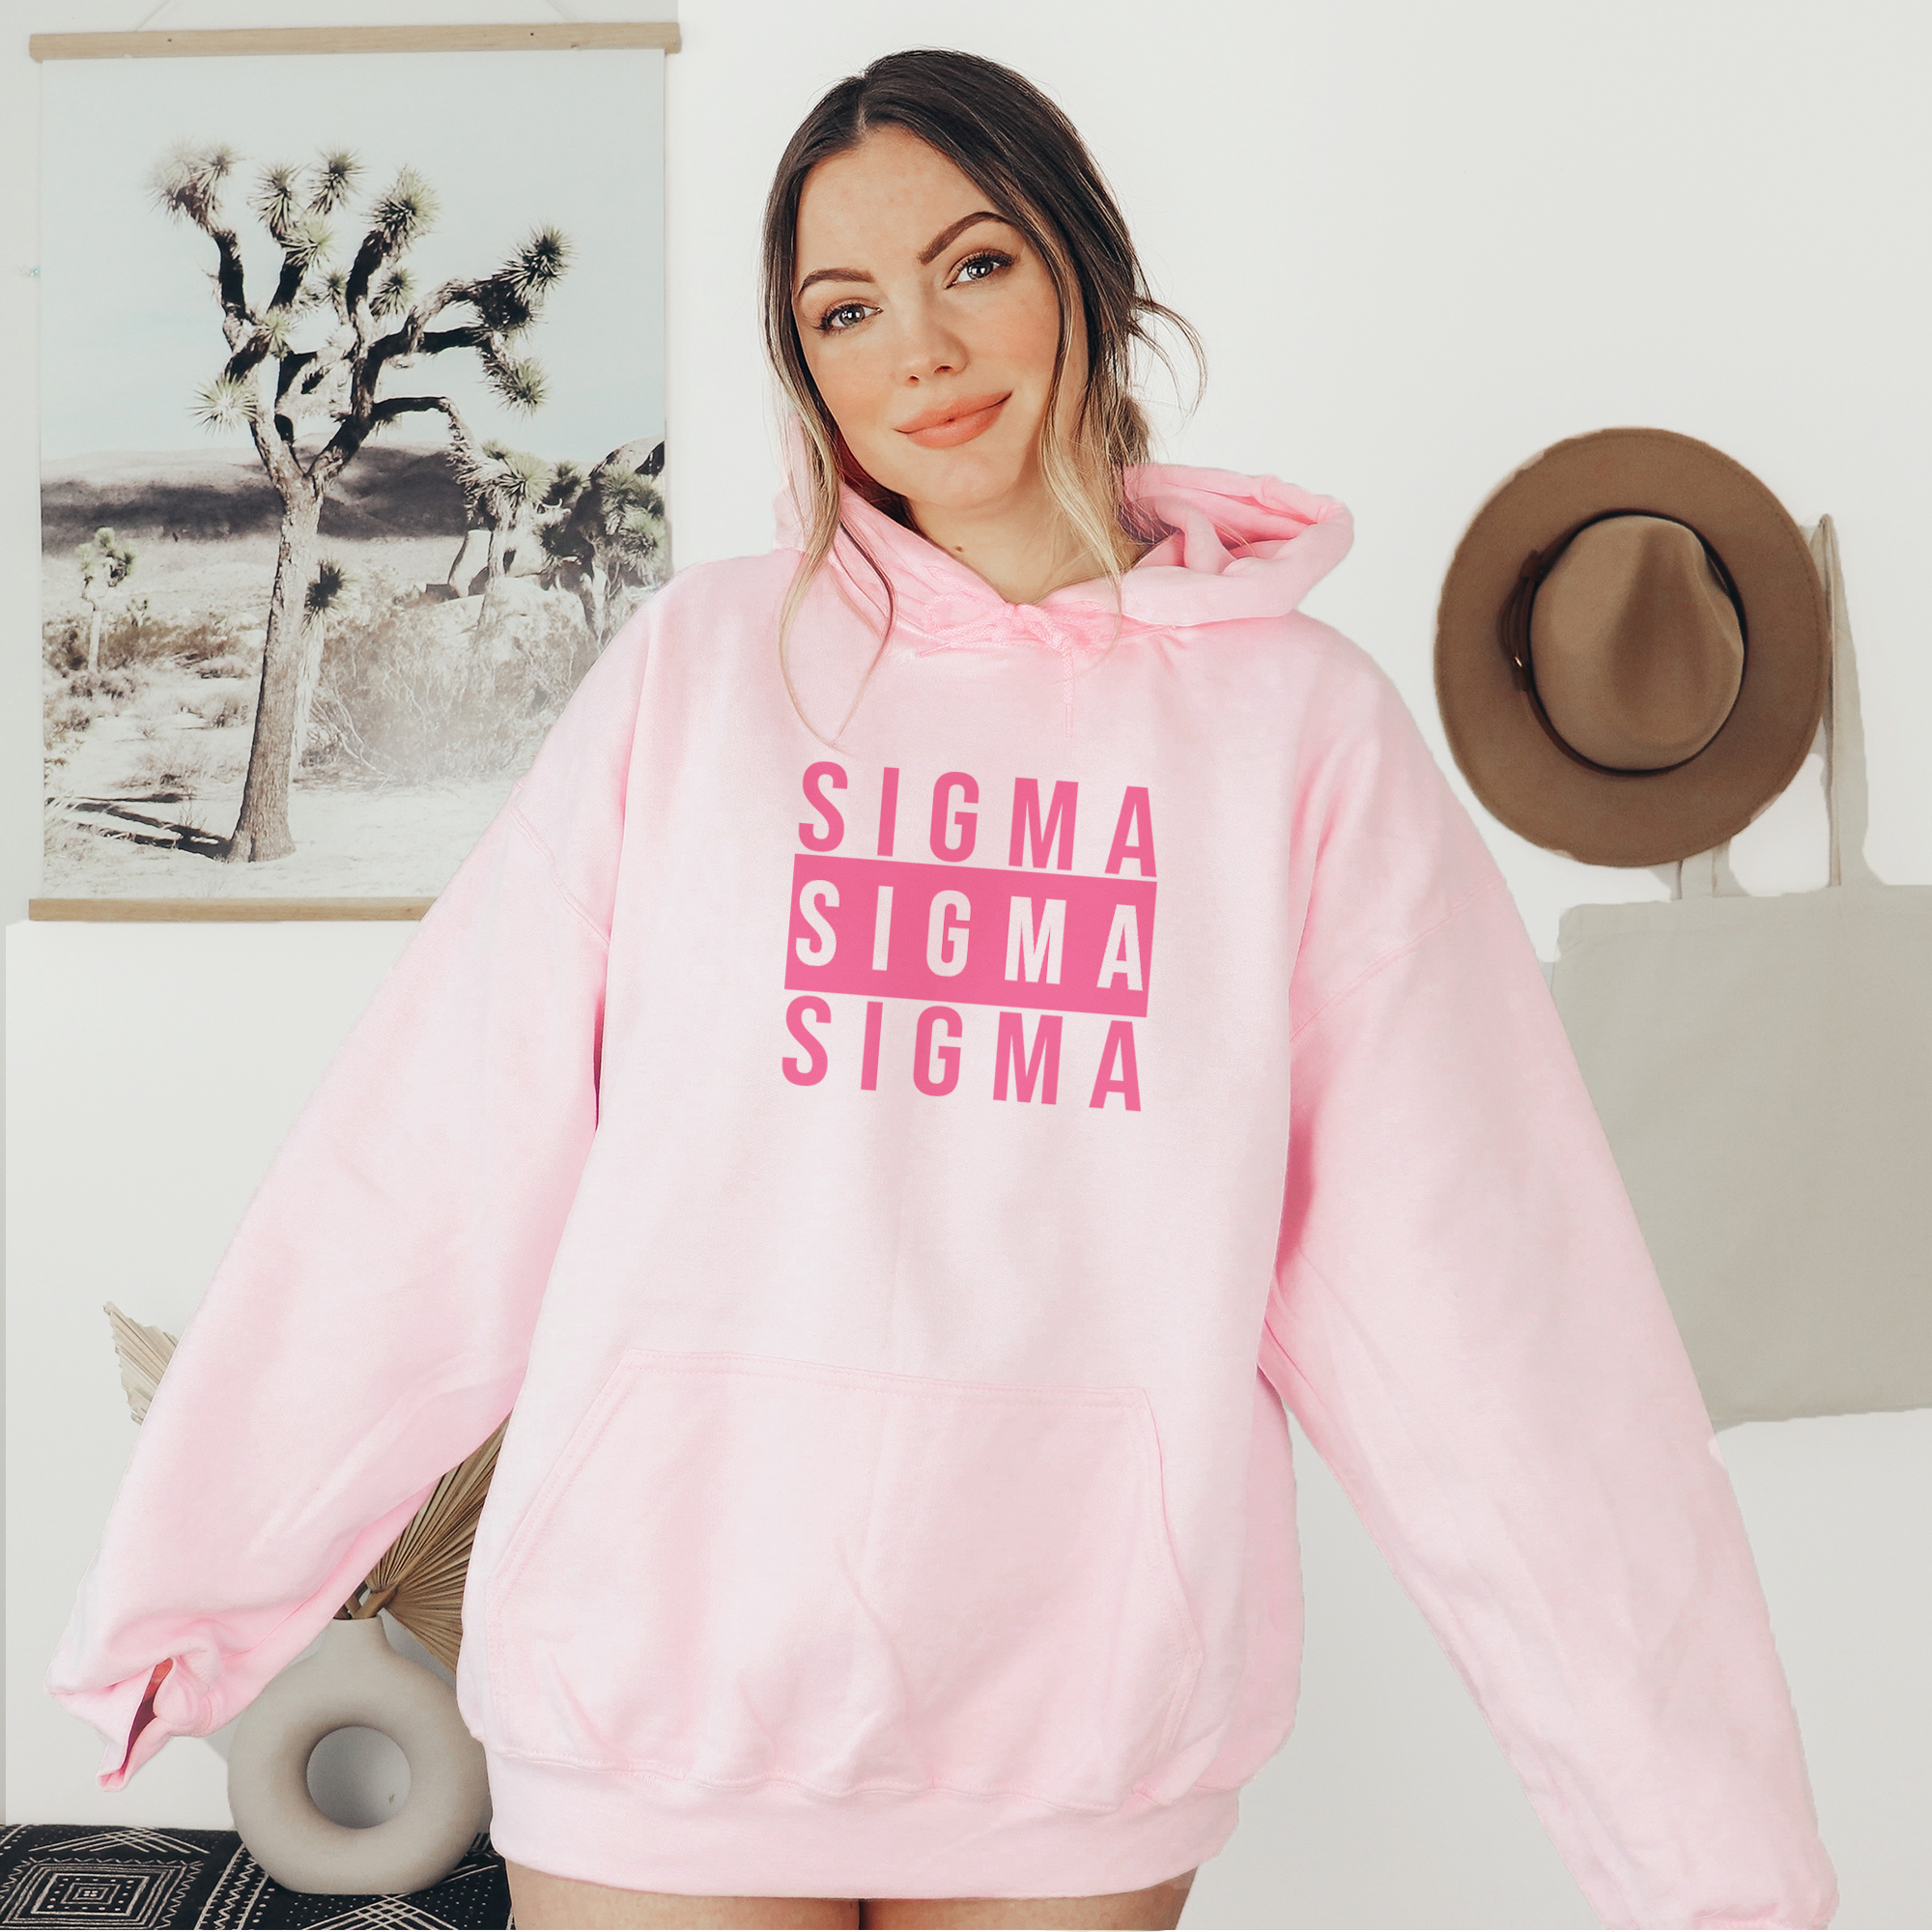 Sigma Sigma Sigma Marquee Hoodie - Tri Sigma Pink Hoodie - Go Greek Chic